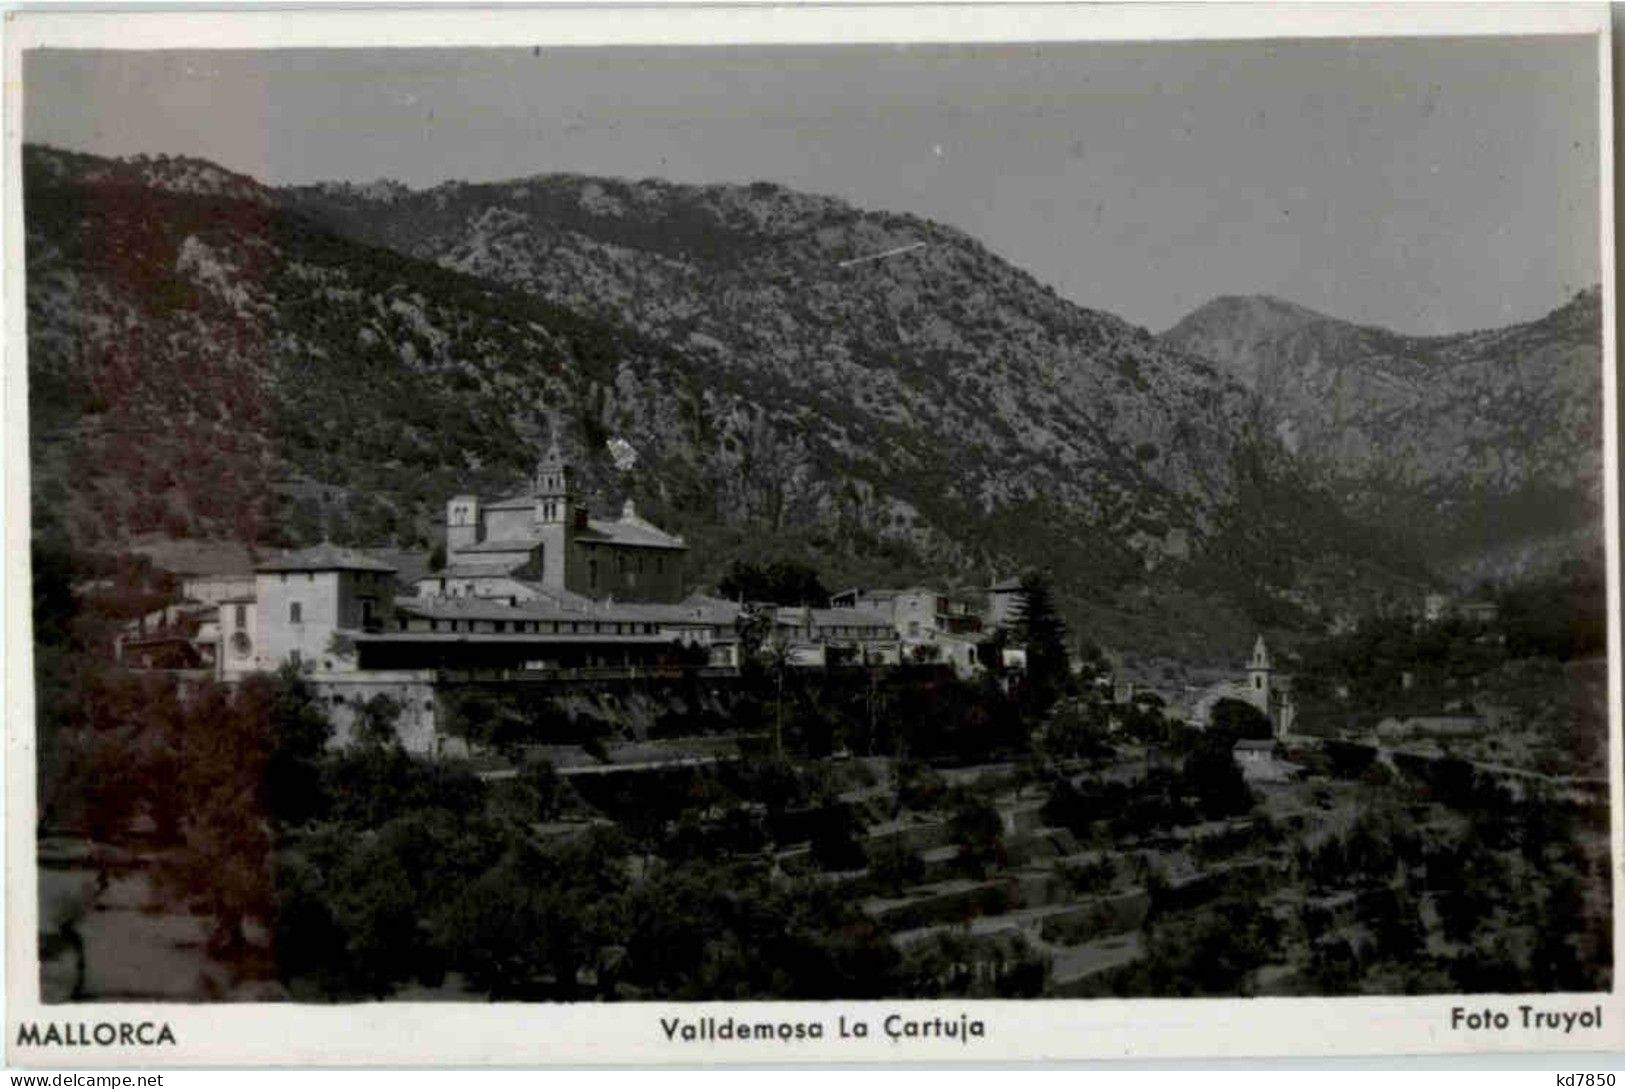 Valldemosa La Cartuja - Mallorca